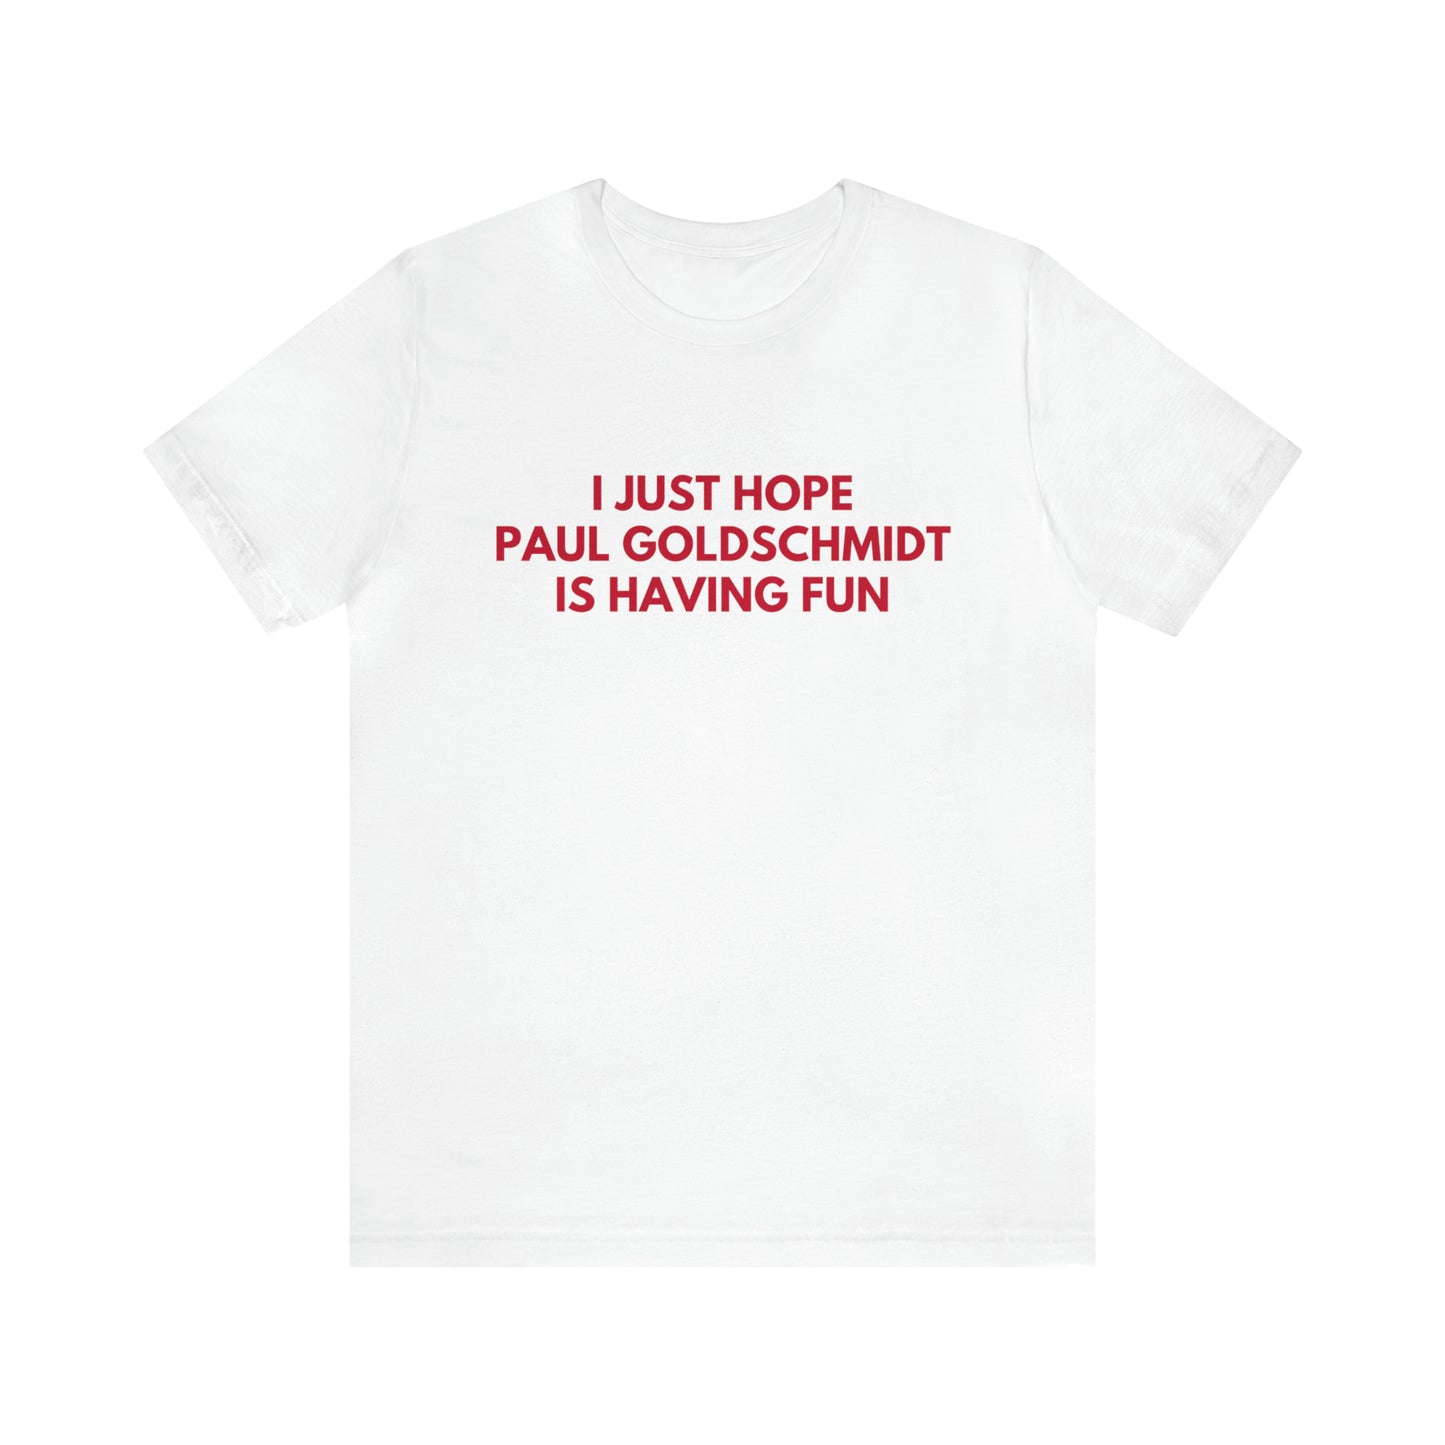 Paul Goldschmidt Having Fun - Unisex T-shirt